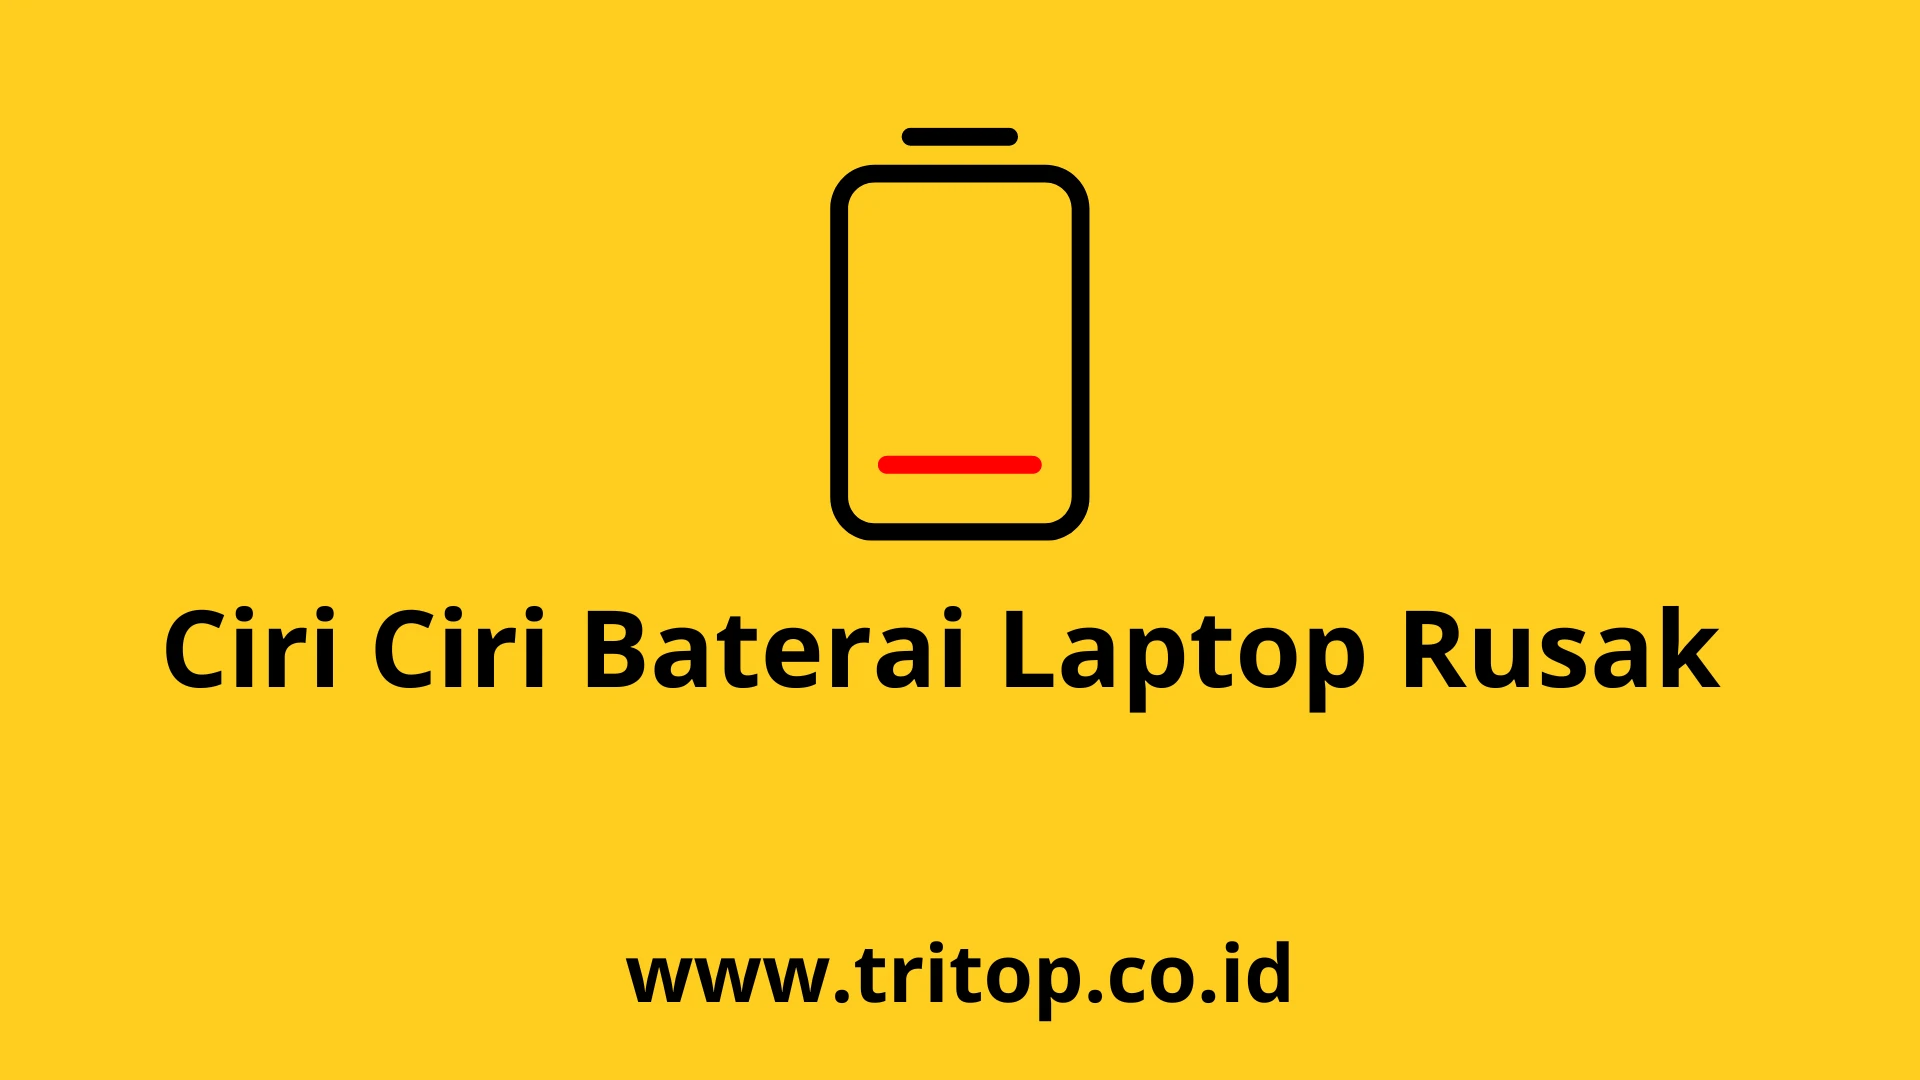 Ciri Ciri Baterai Laptop Rusak Tritop.co.id